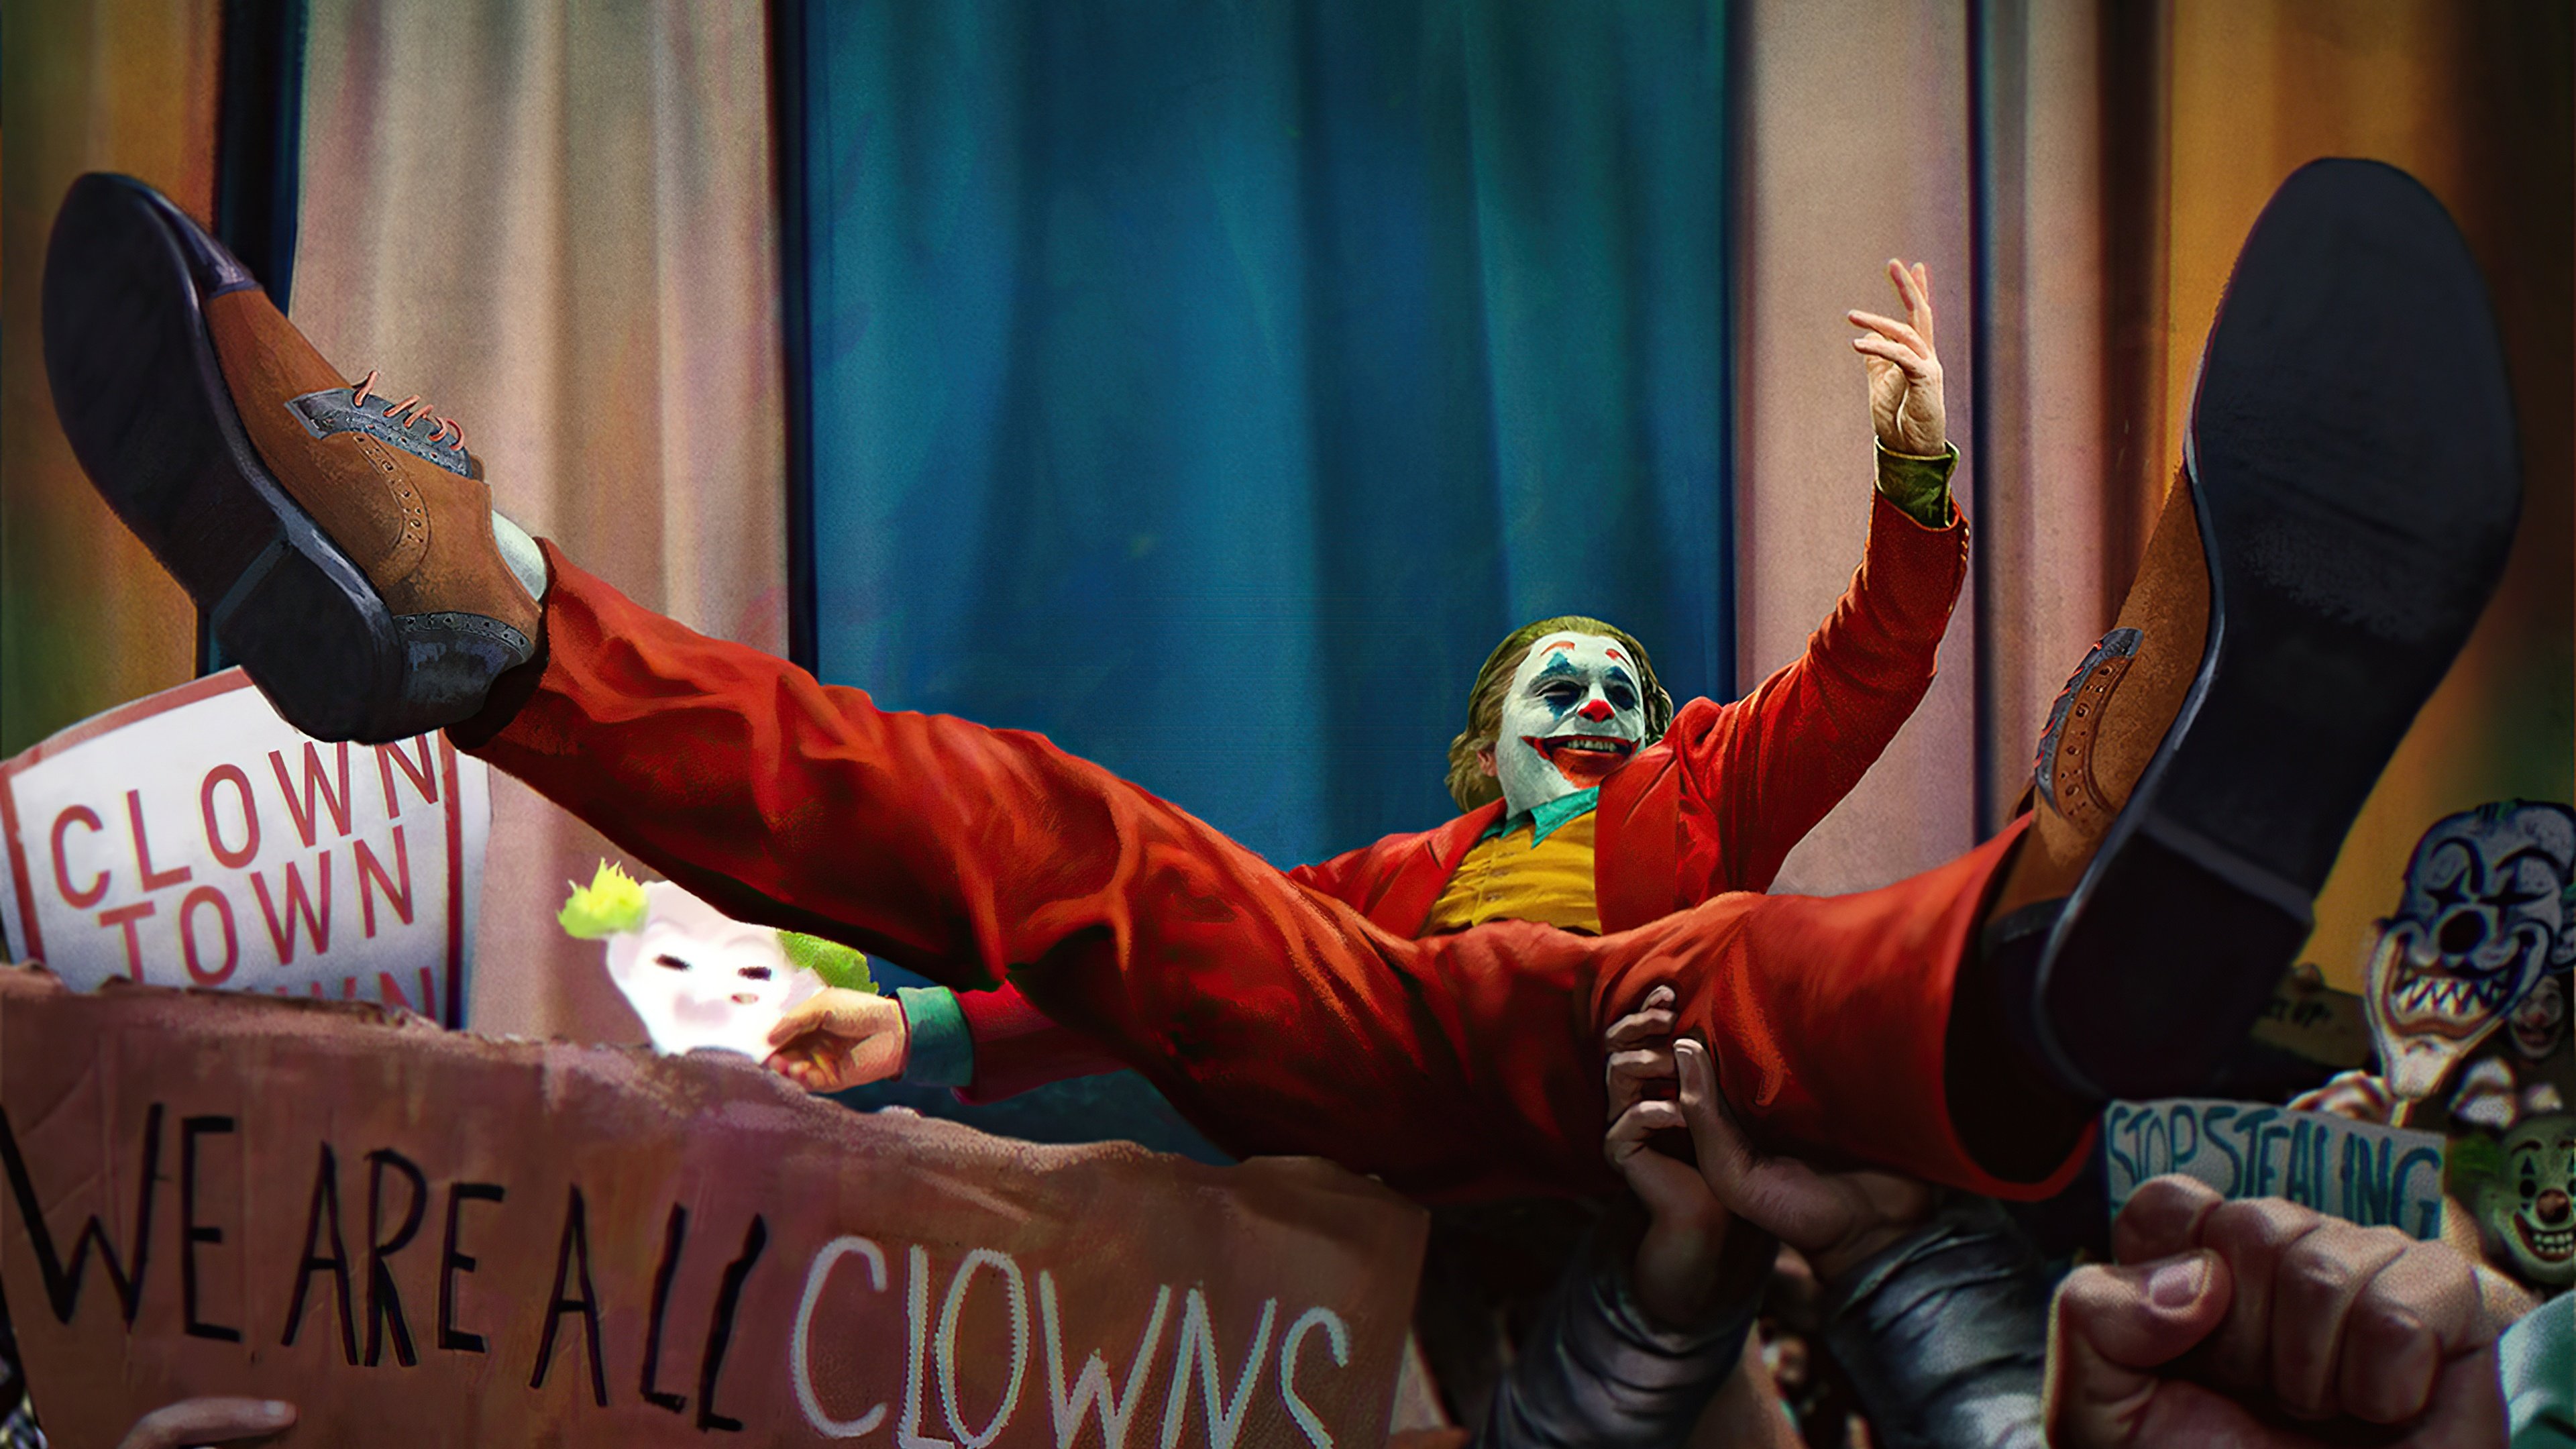 Fondos de pantalla Guason We are all clowns